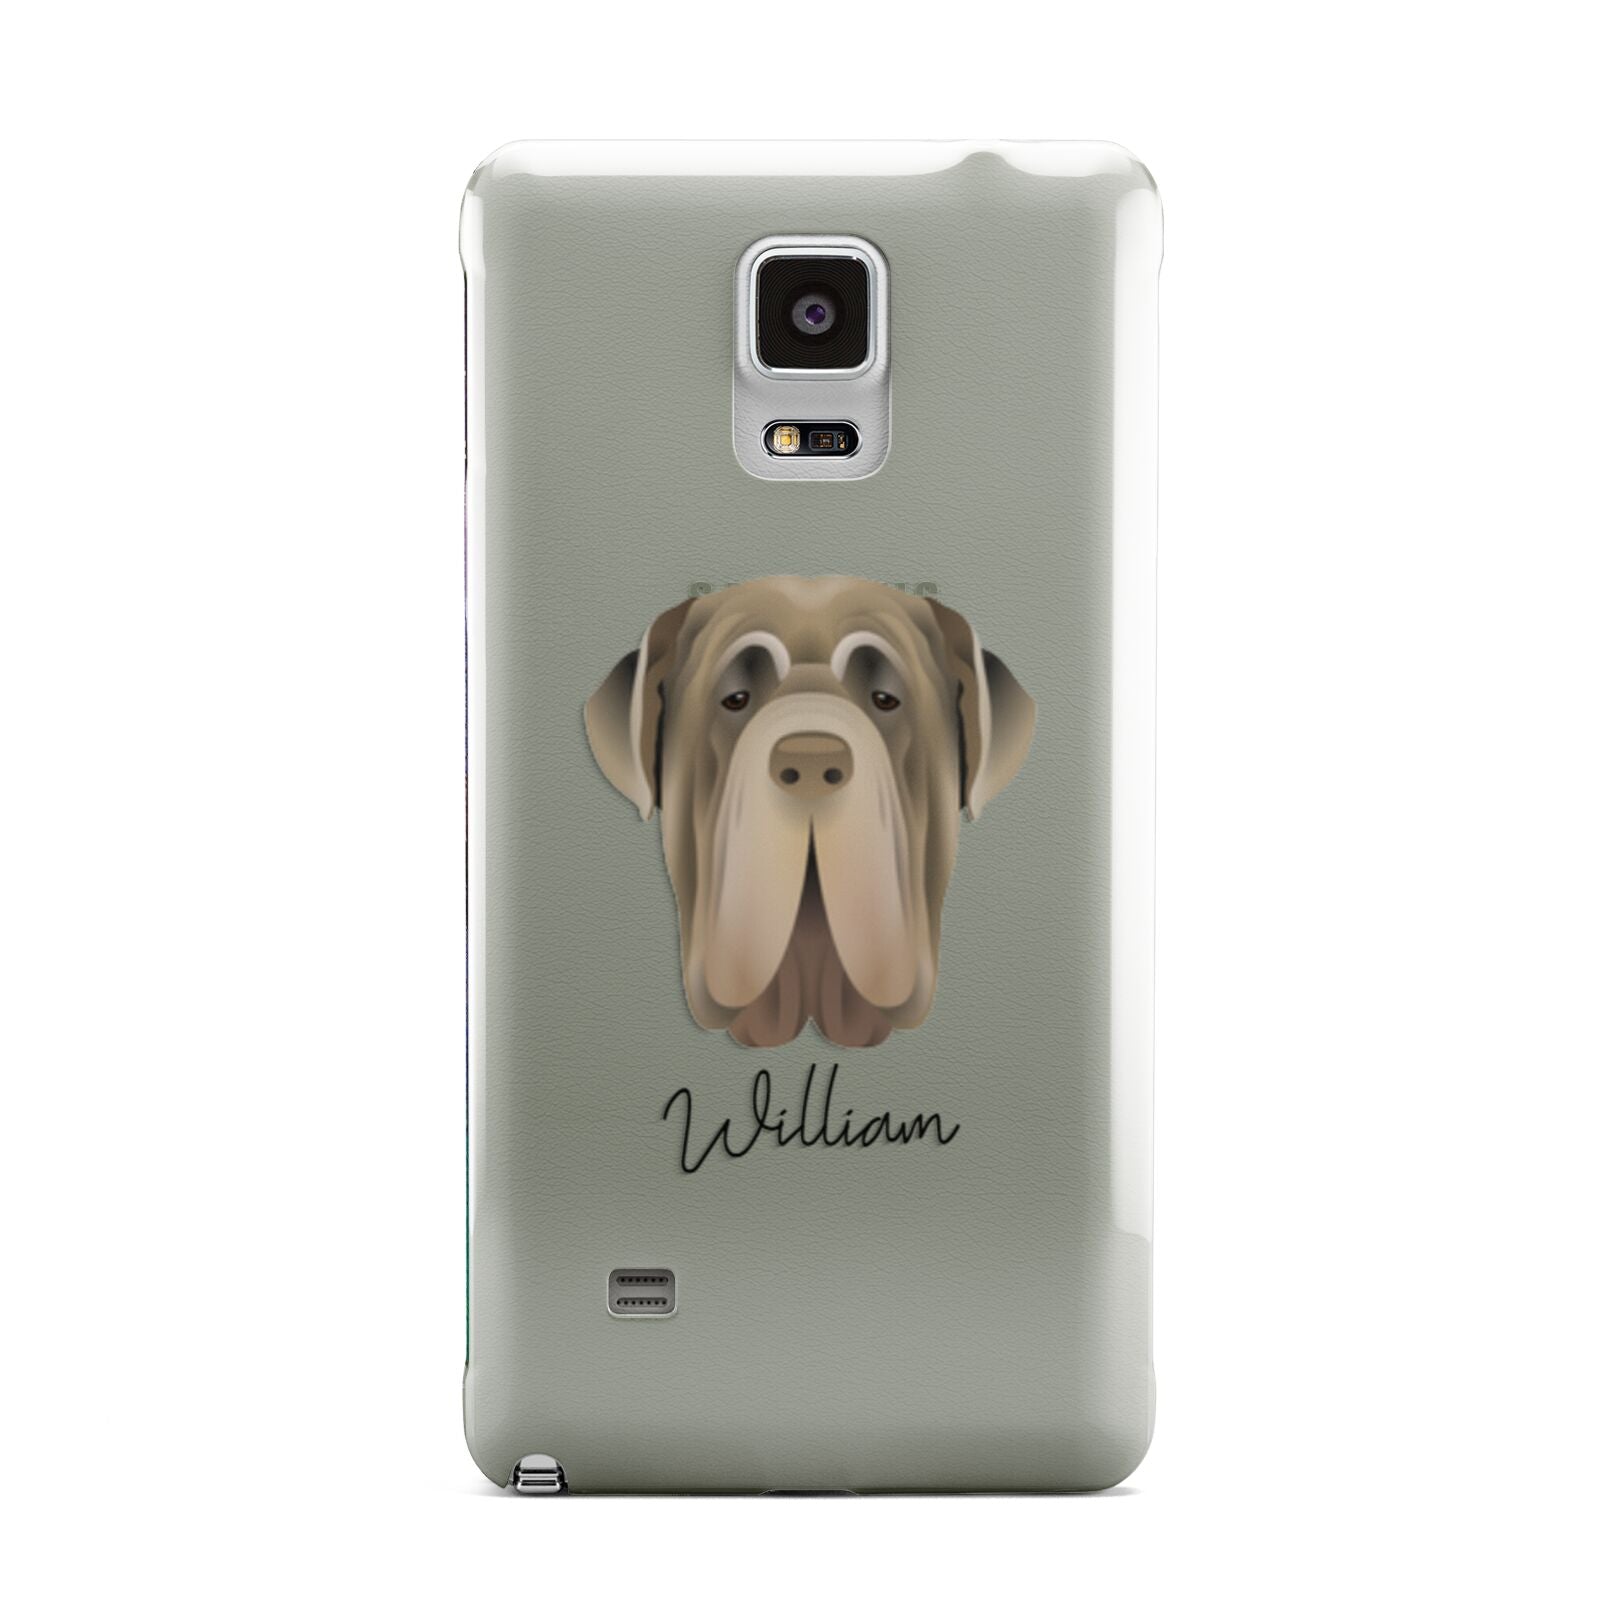 Neapolitan Mastiff Personalised Samsung Galaxy Note 4 Case